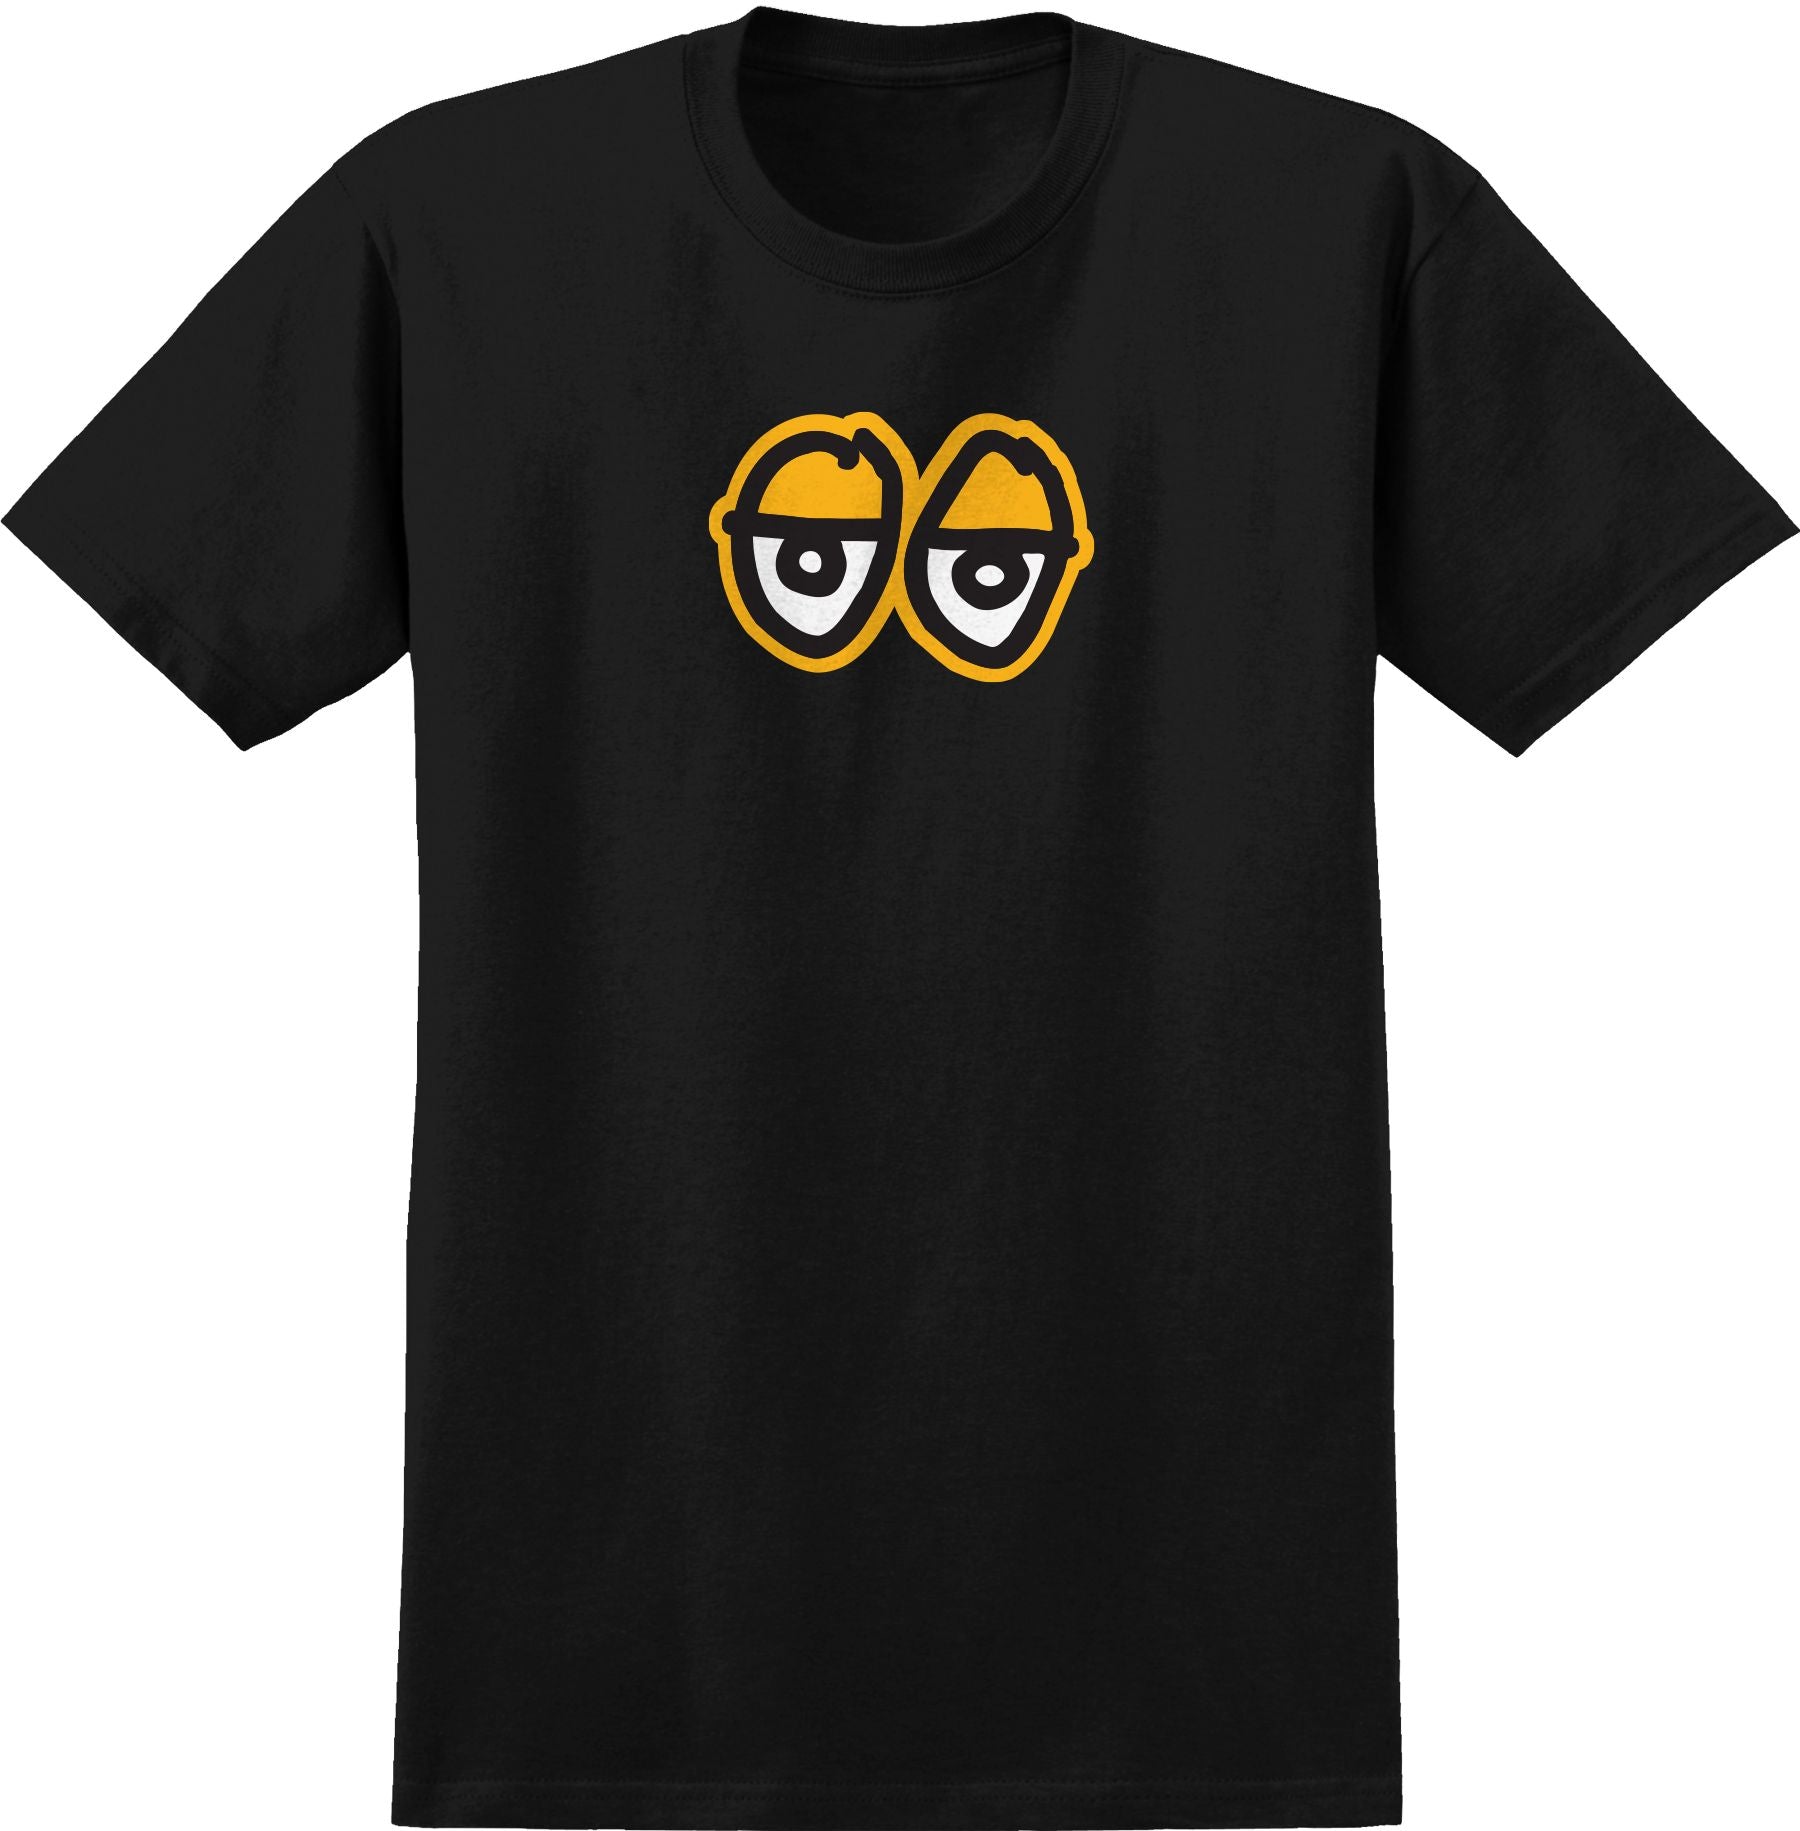 Black/Gold Krooked Eyes T-Shirt